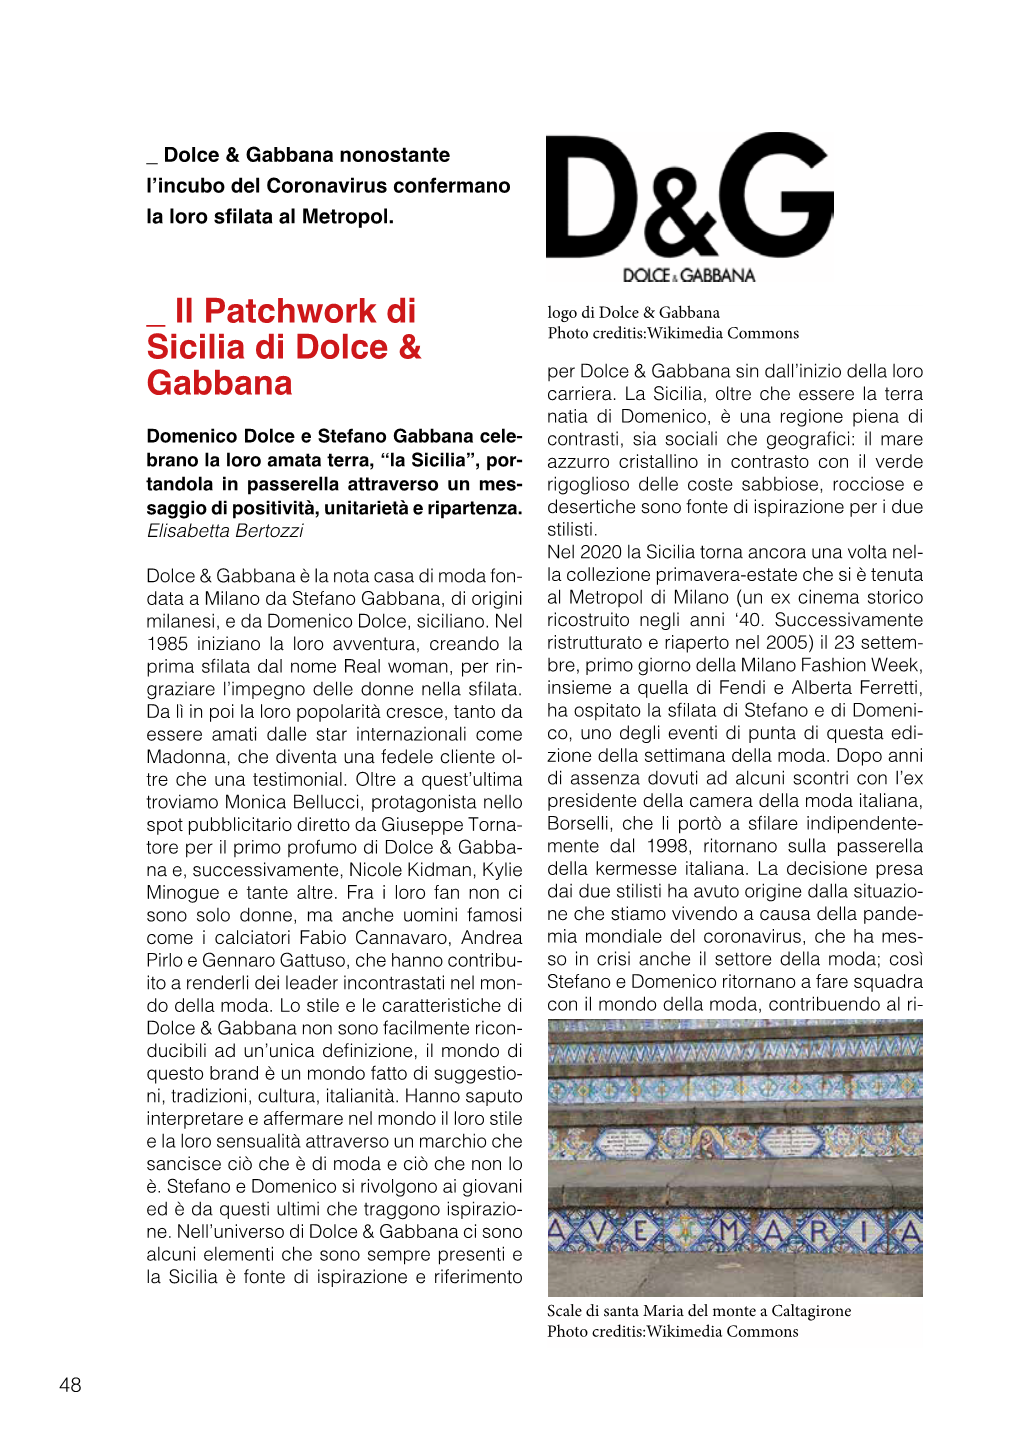 Il Patchwork Di Sicilia Di Dolce & Gabbana